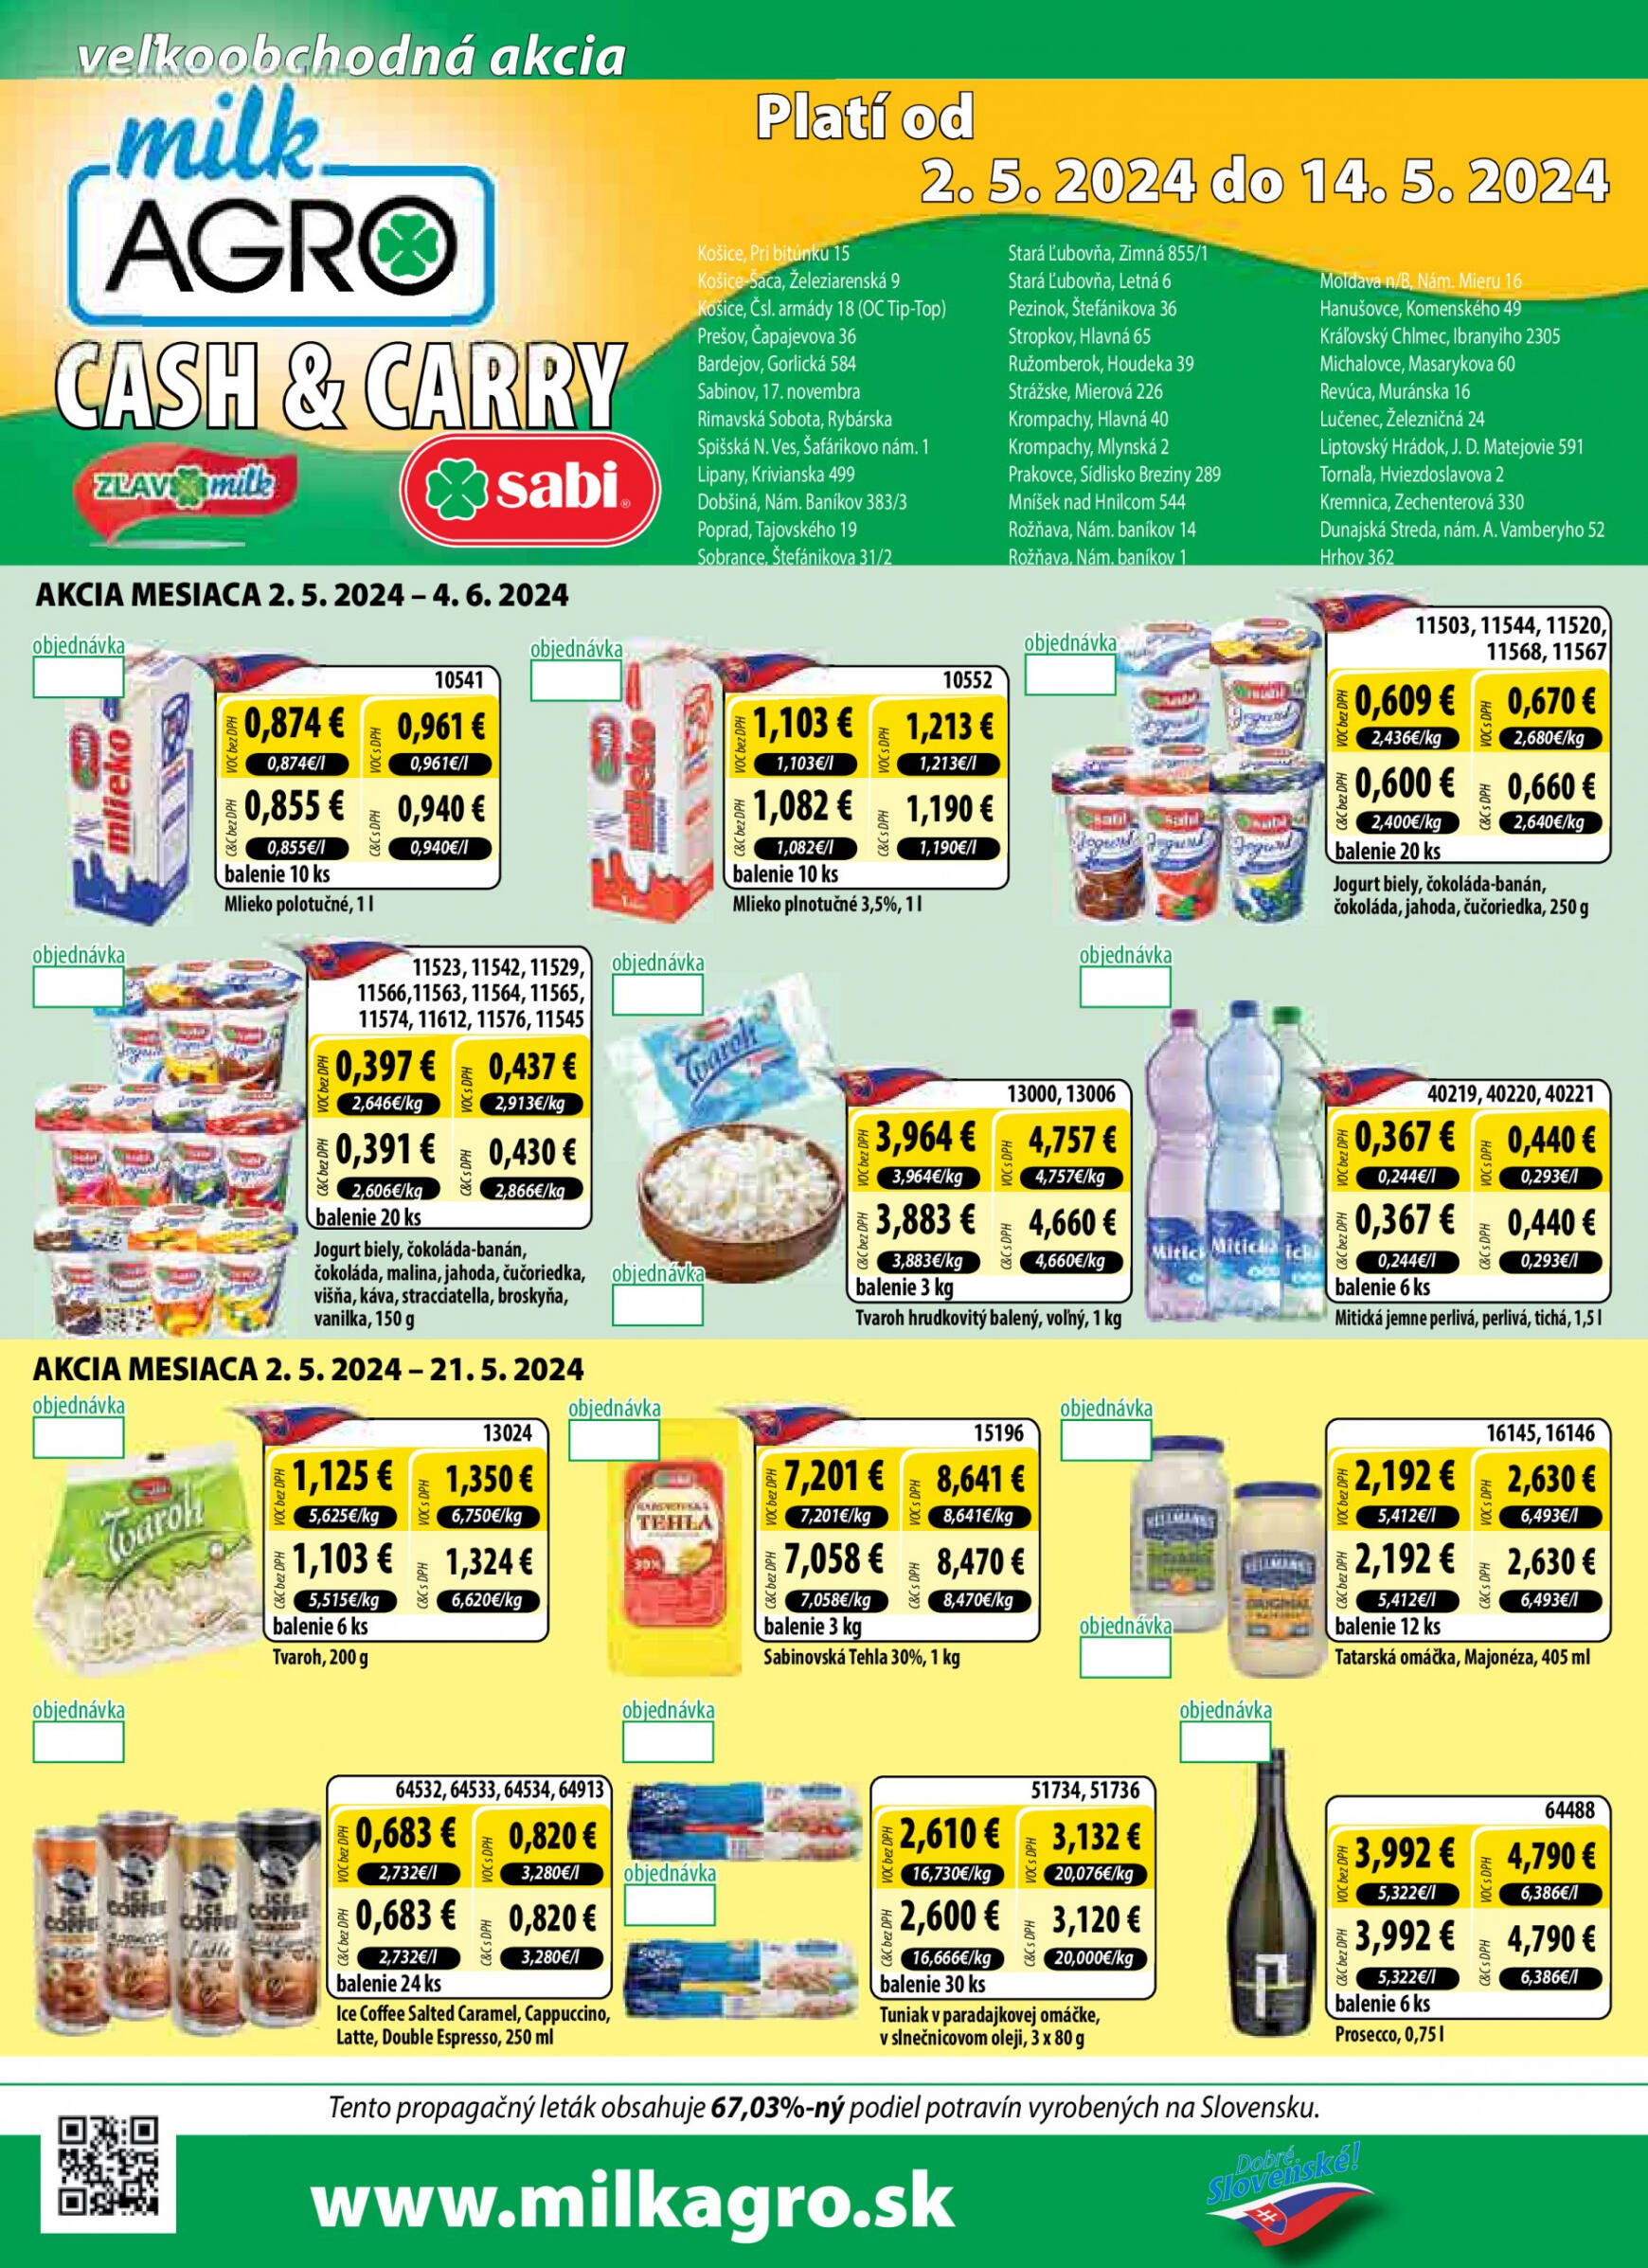 milk-agro - Milk Agro - Cash & Carry leták platný od 02.05. - 14.05.